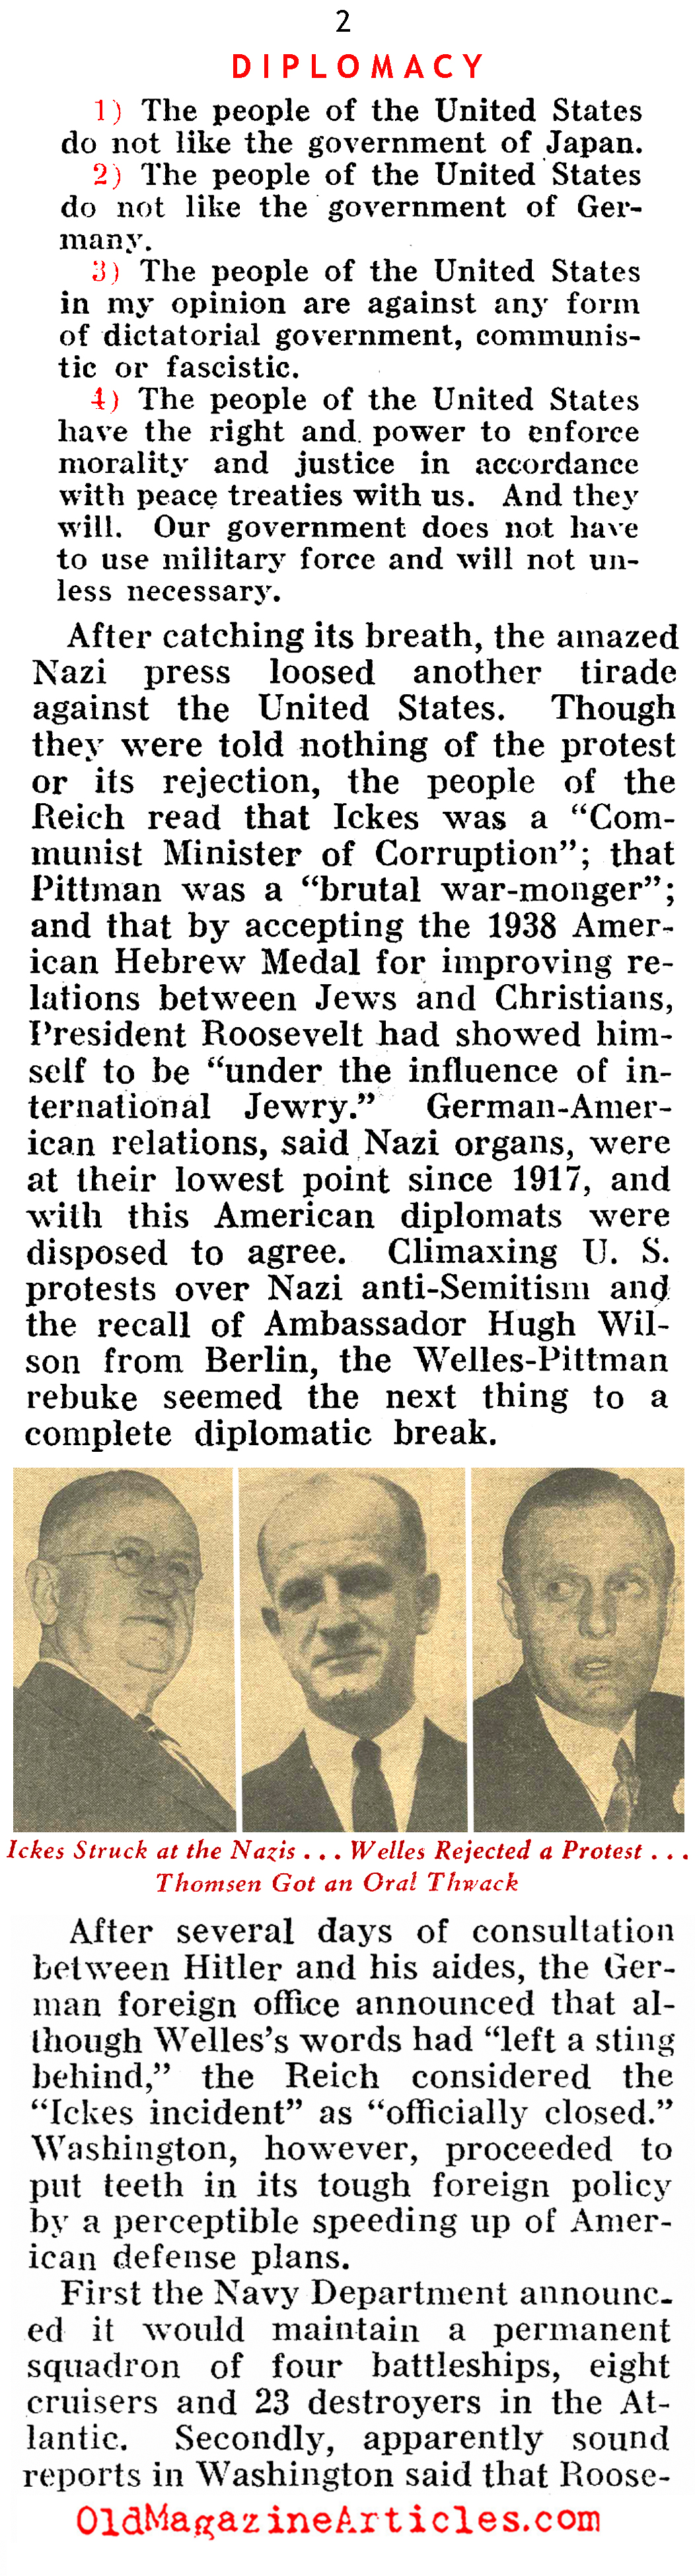 No, Joe Biden, U.S. Relations With Germany Were Bad Before W.W. II (Pathfinder Magazine, 1939)